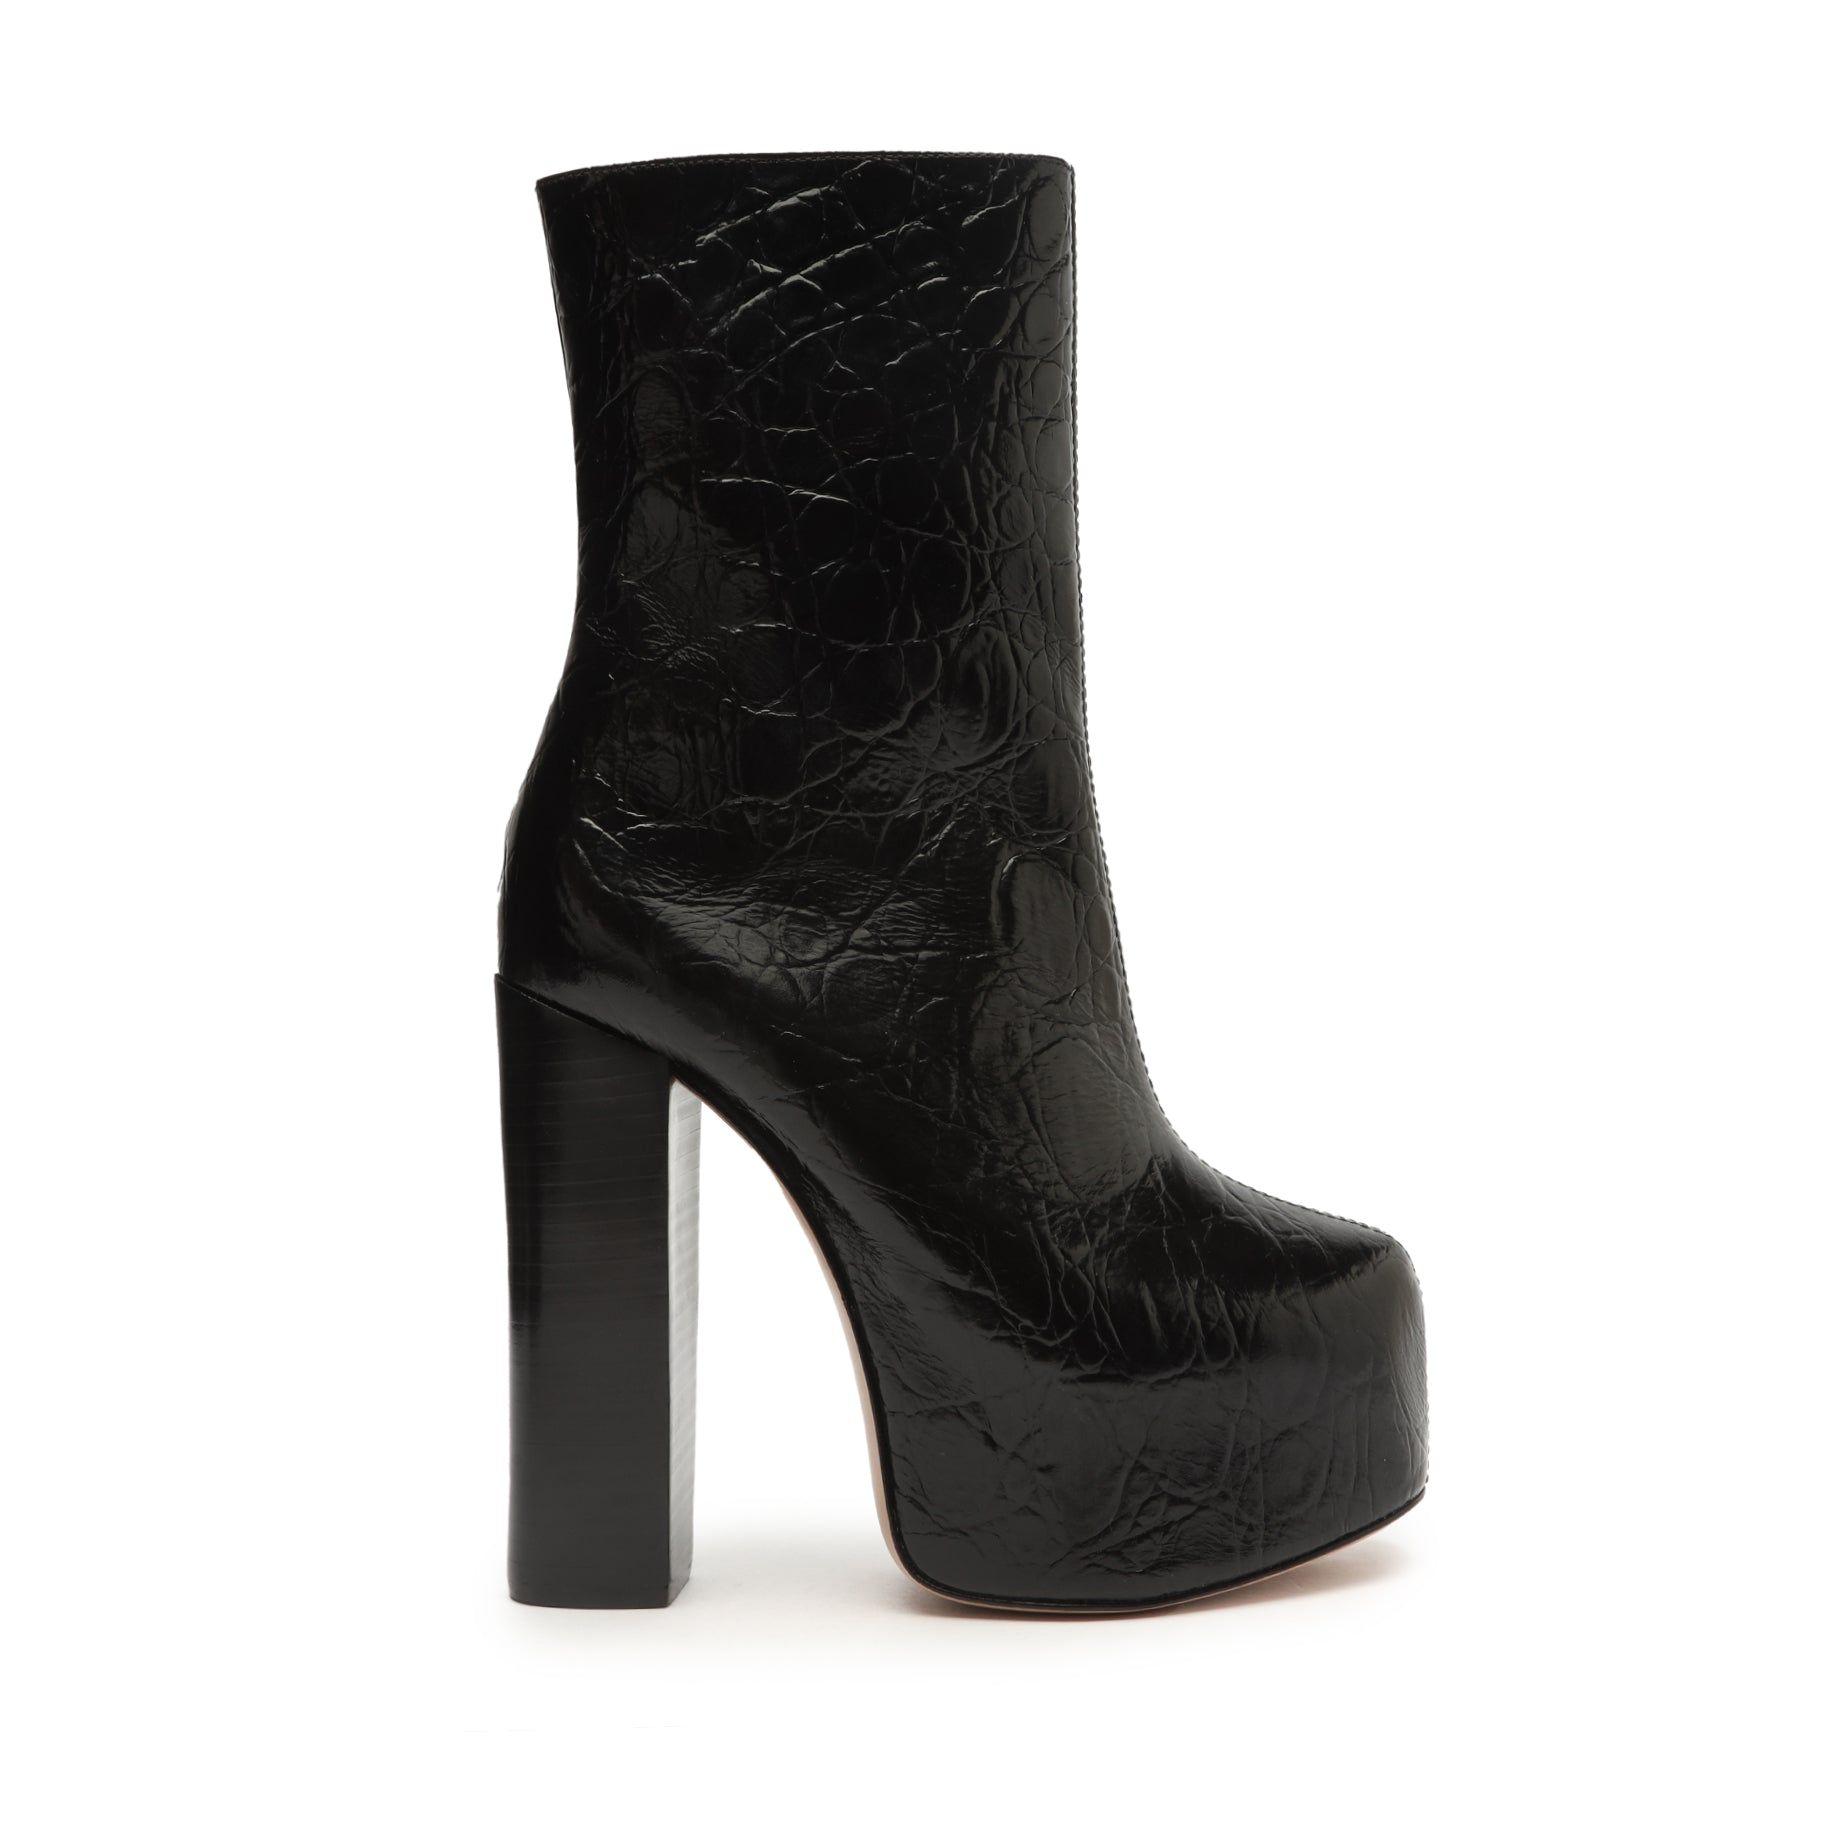 Schutz Women's Abbey Croc Embossed Kitten Heel Boots - Black - Size 6.5